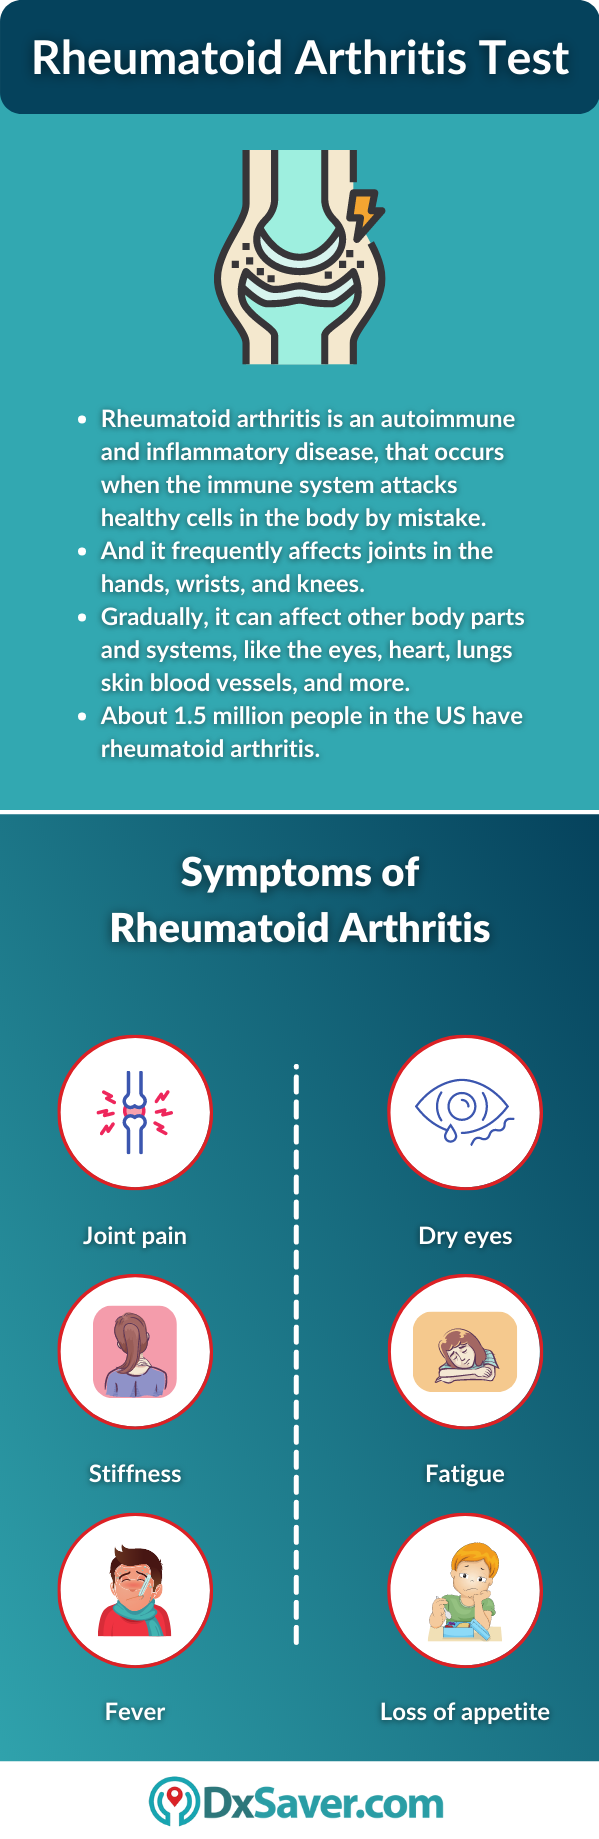 Rheumatoid Arthritis and its Symptoms